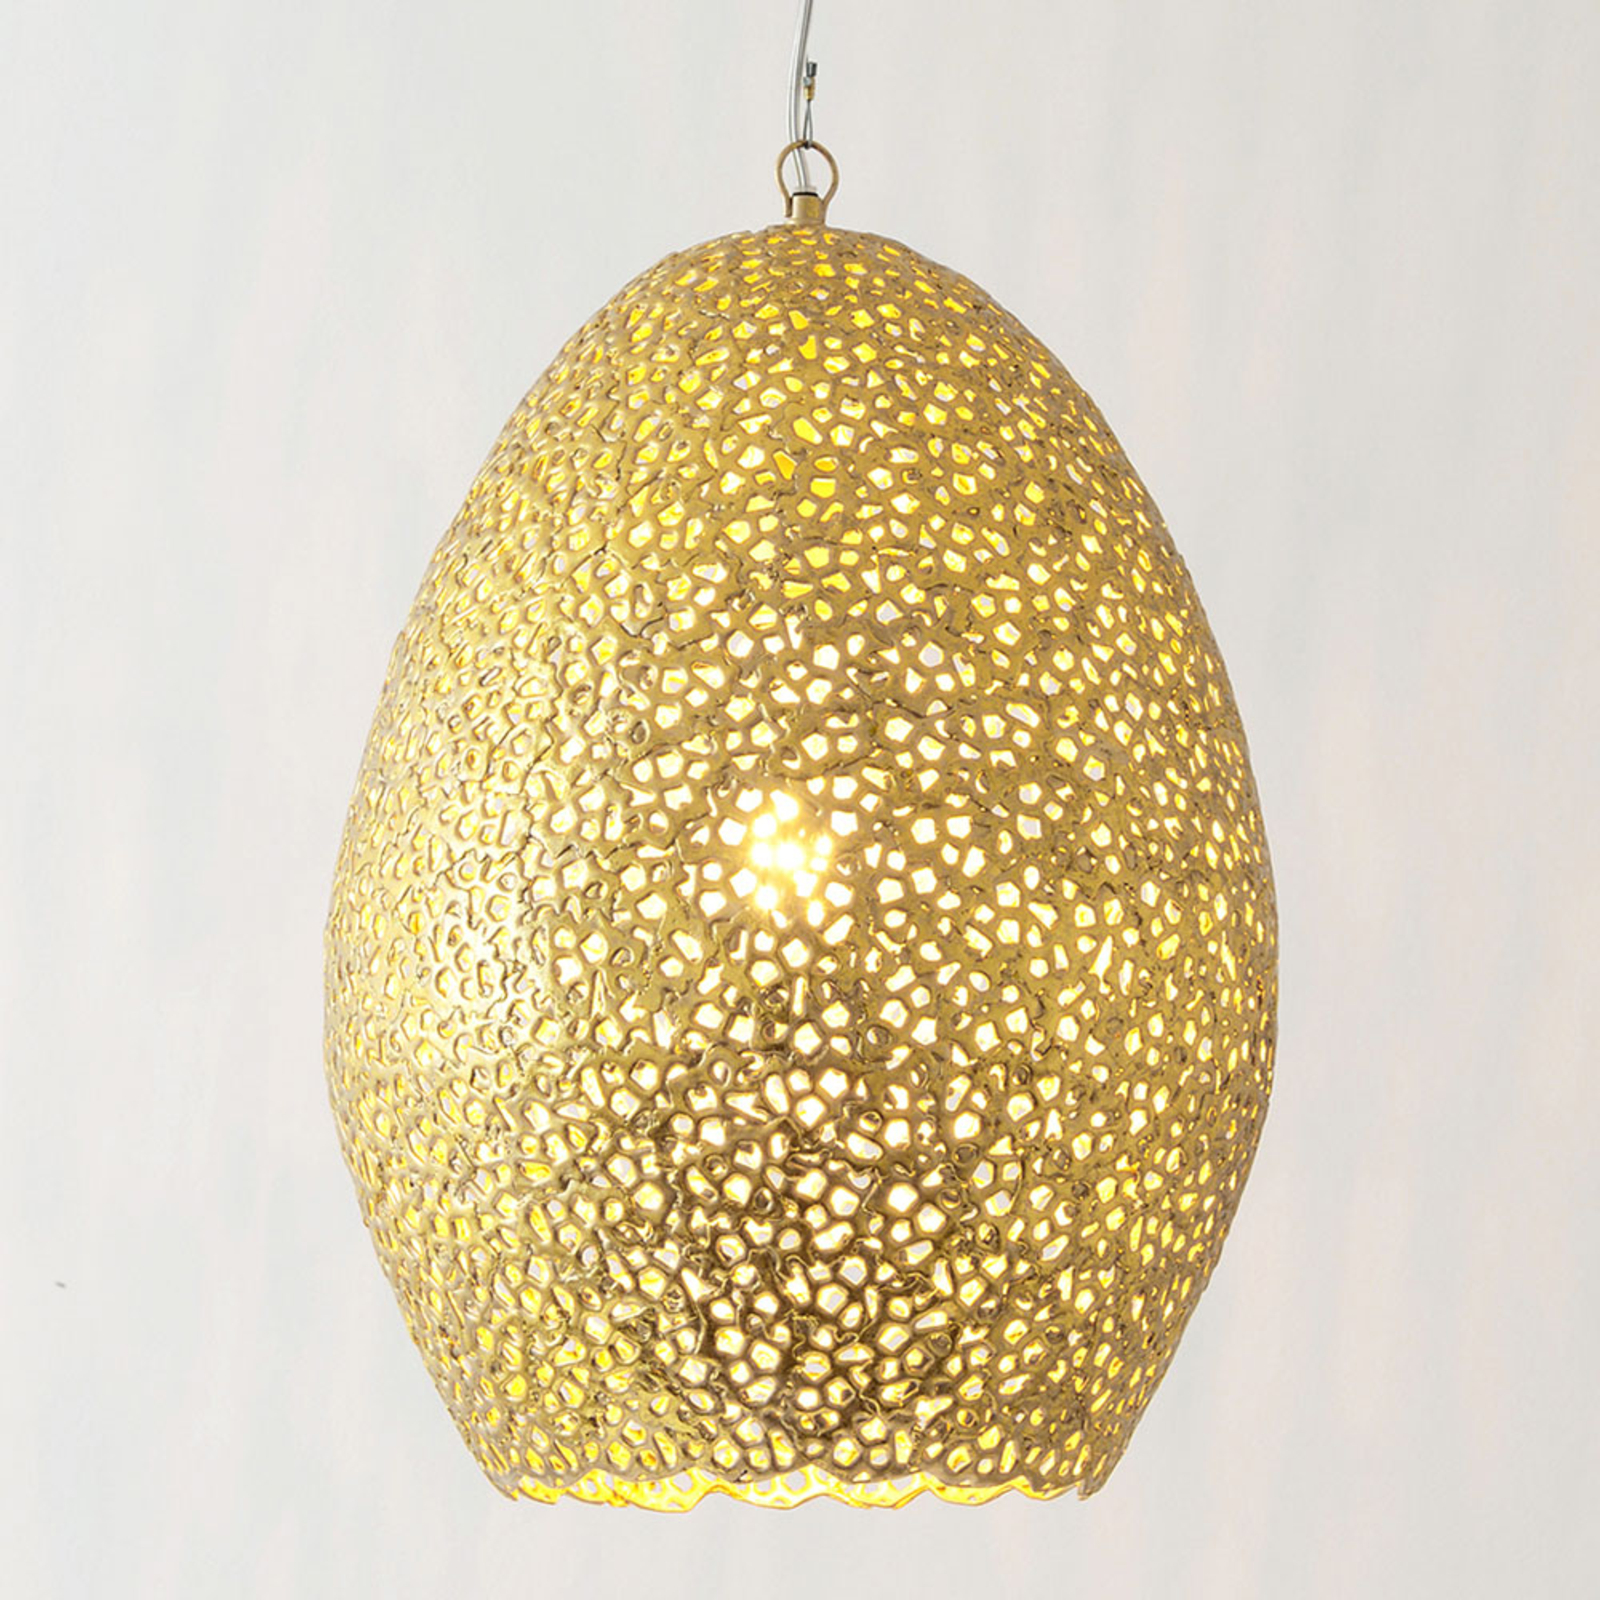 Cavalliere pendant light, gold, Ø 34 cm